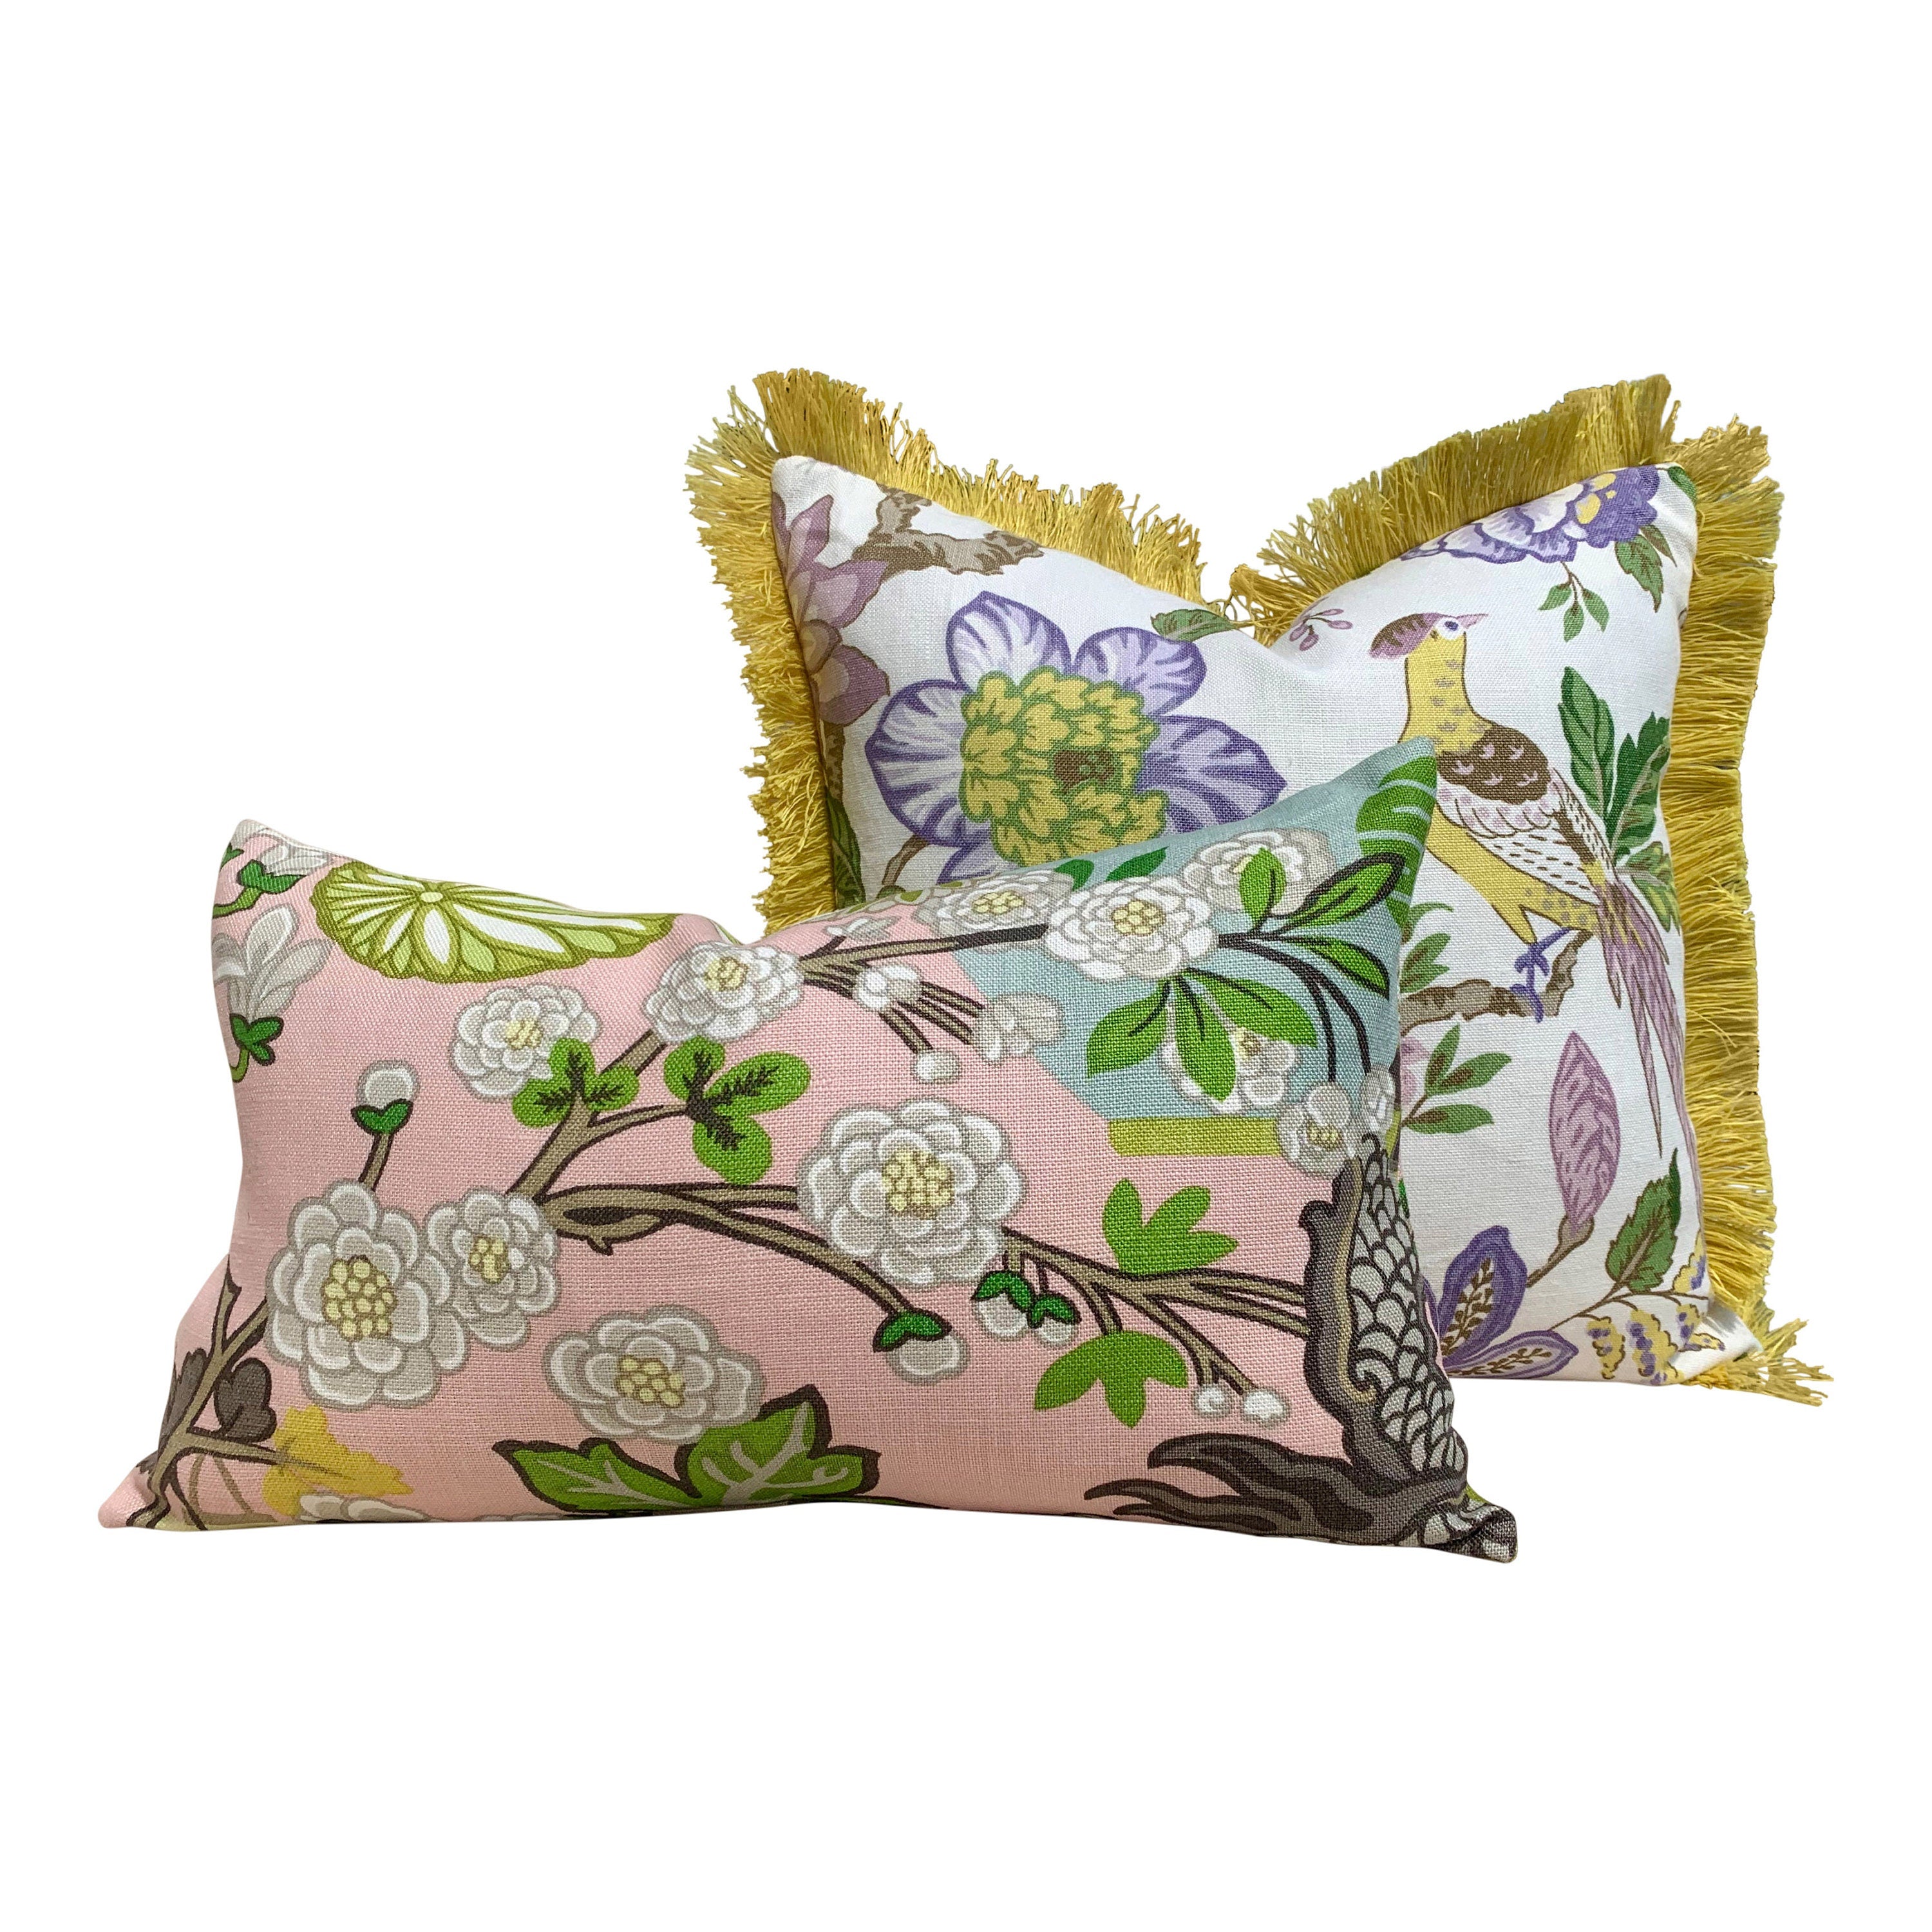 Schumacher Huntington Garden Pillow in Lilac. Decorative lumbar Pillow in Yellow.